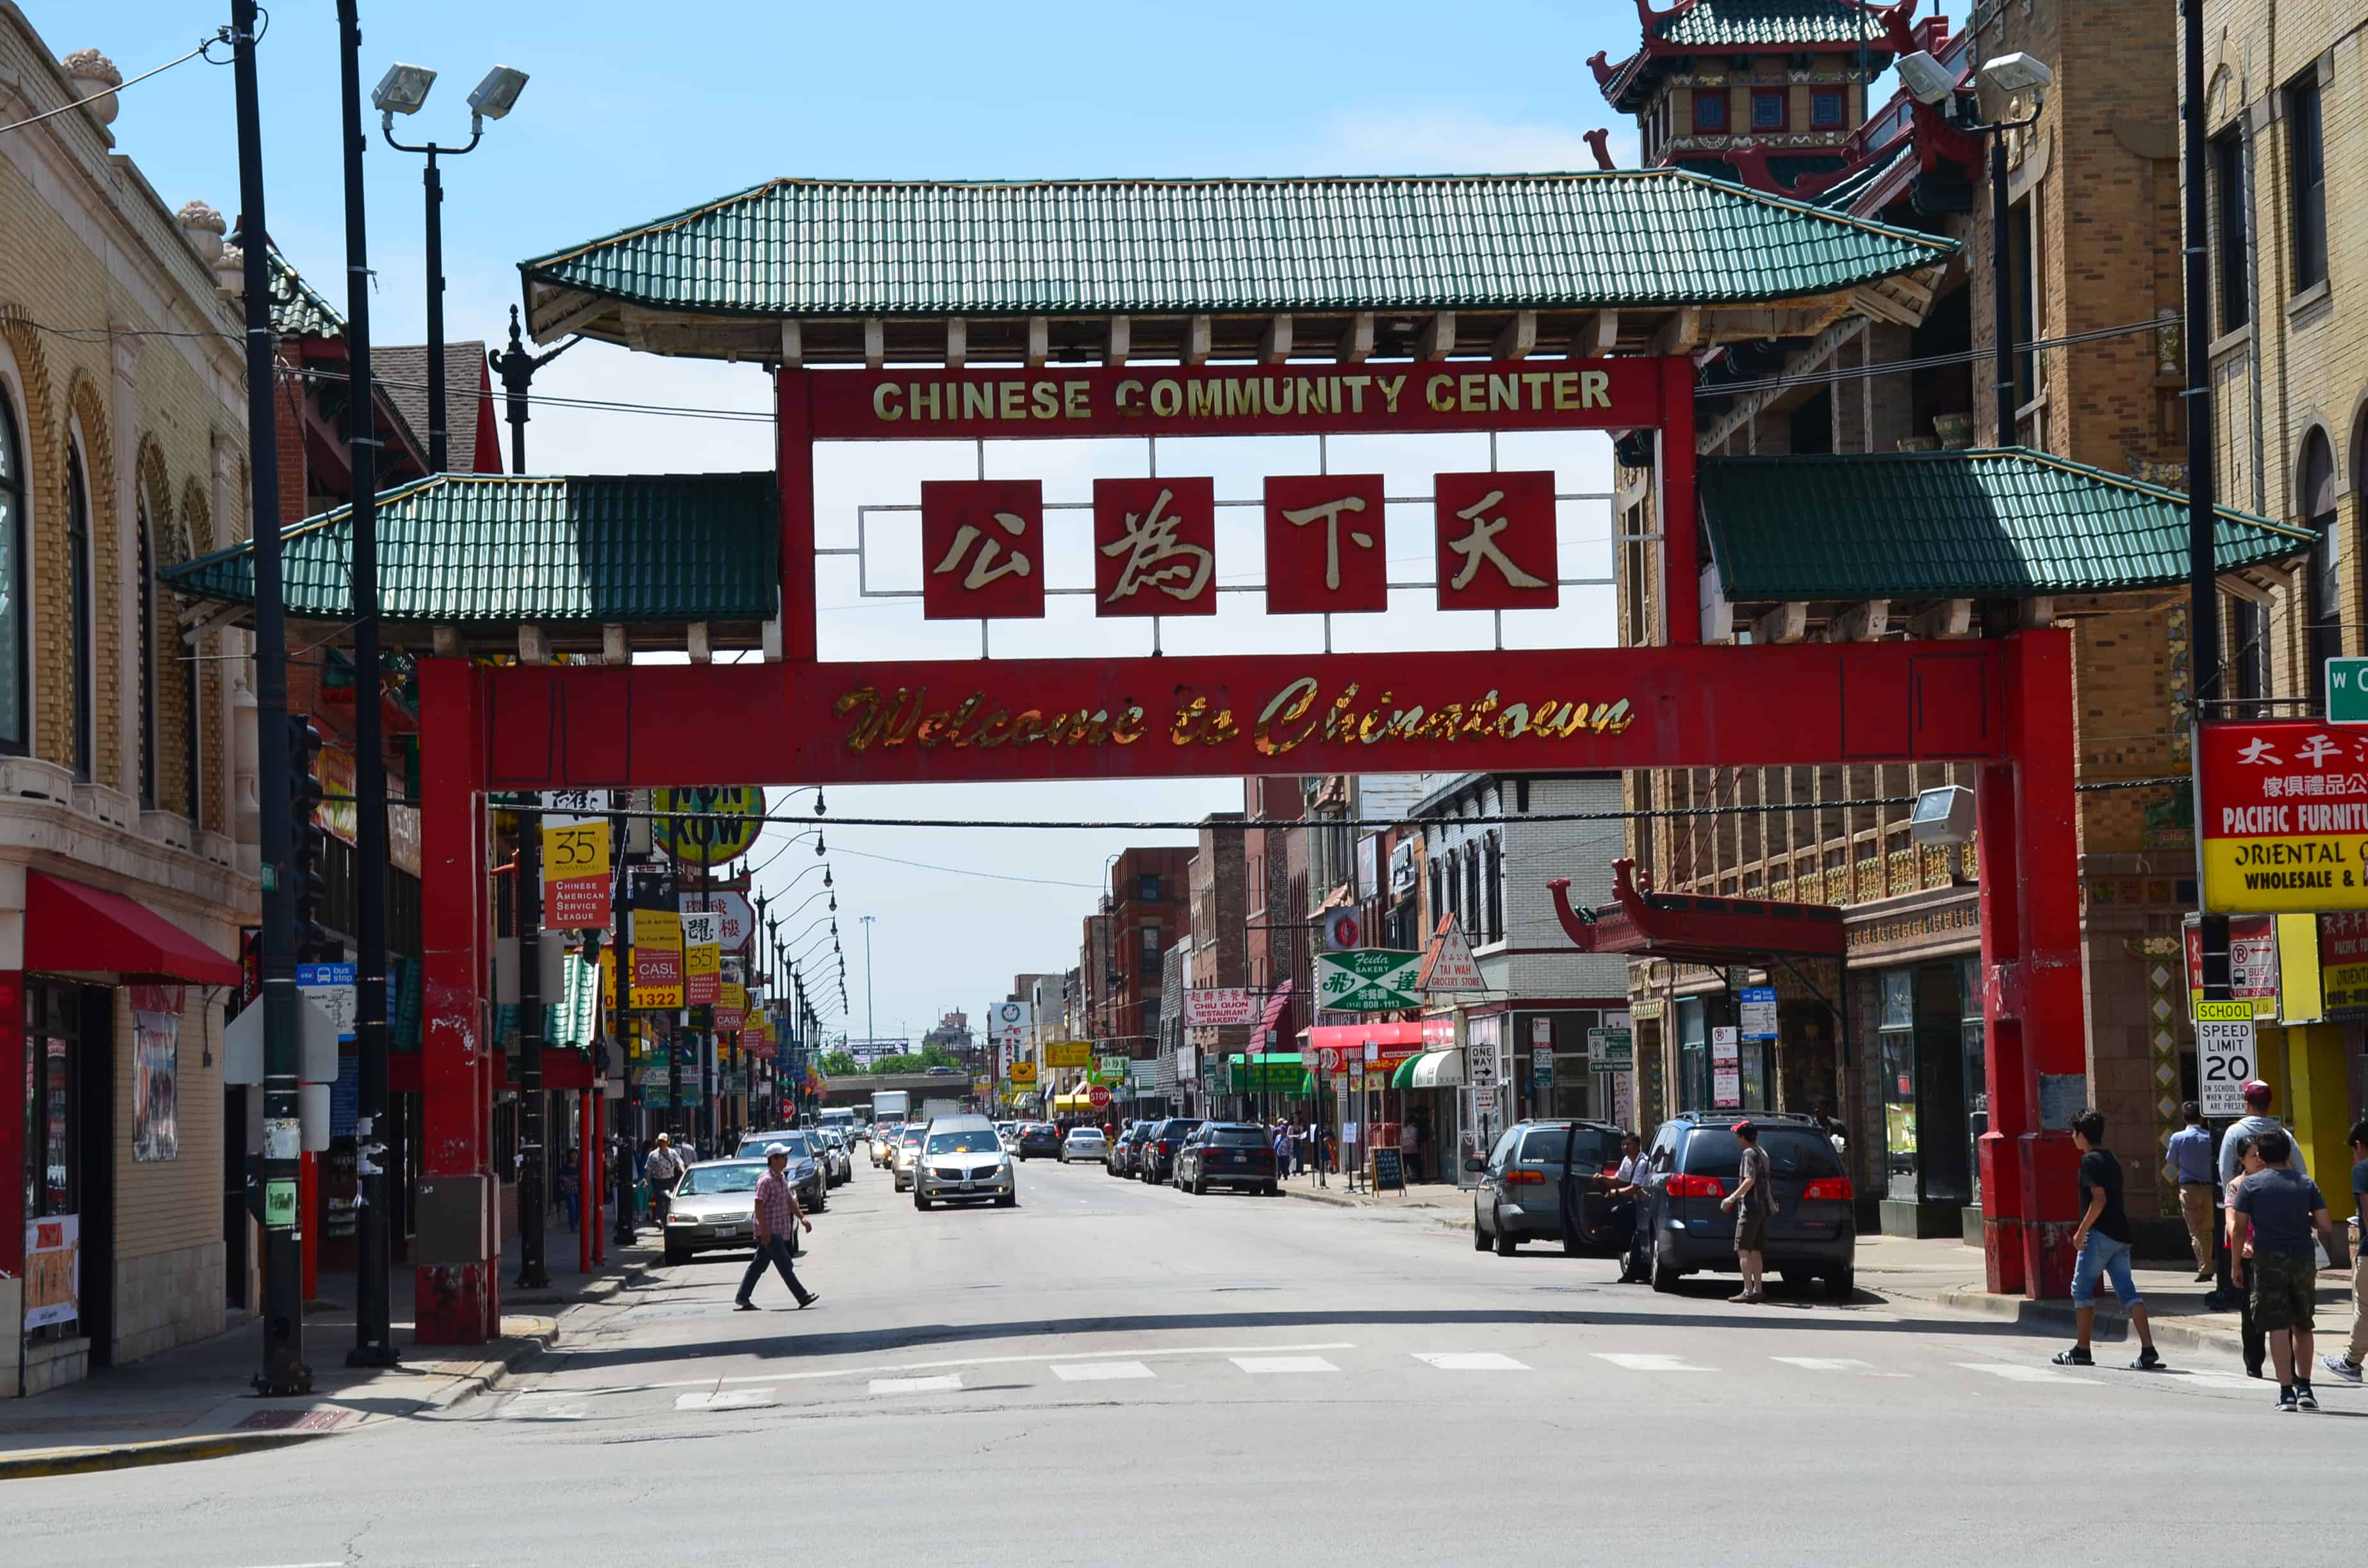 Chinatown Gate in Chinatown, Chicago, Illinois